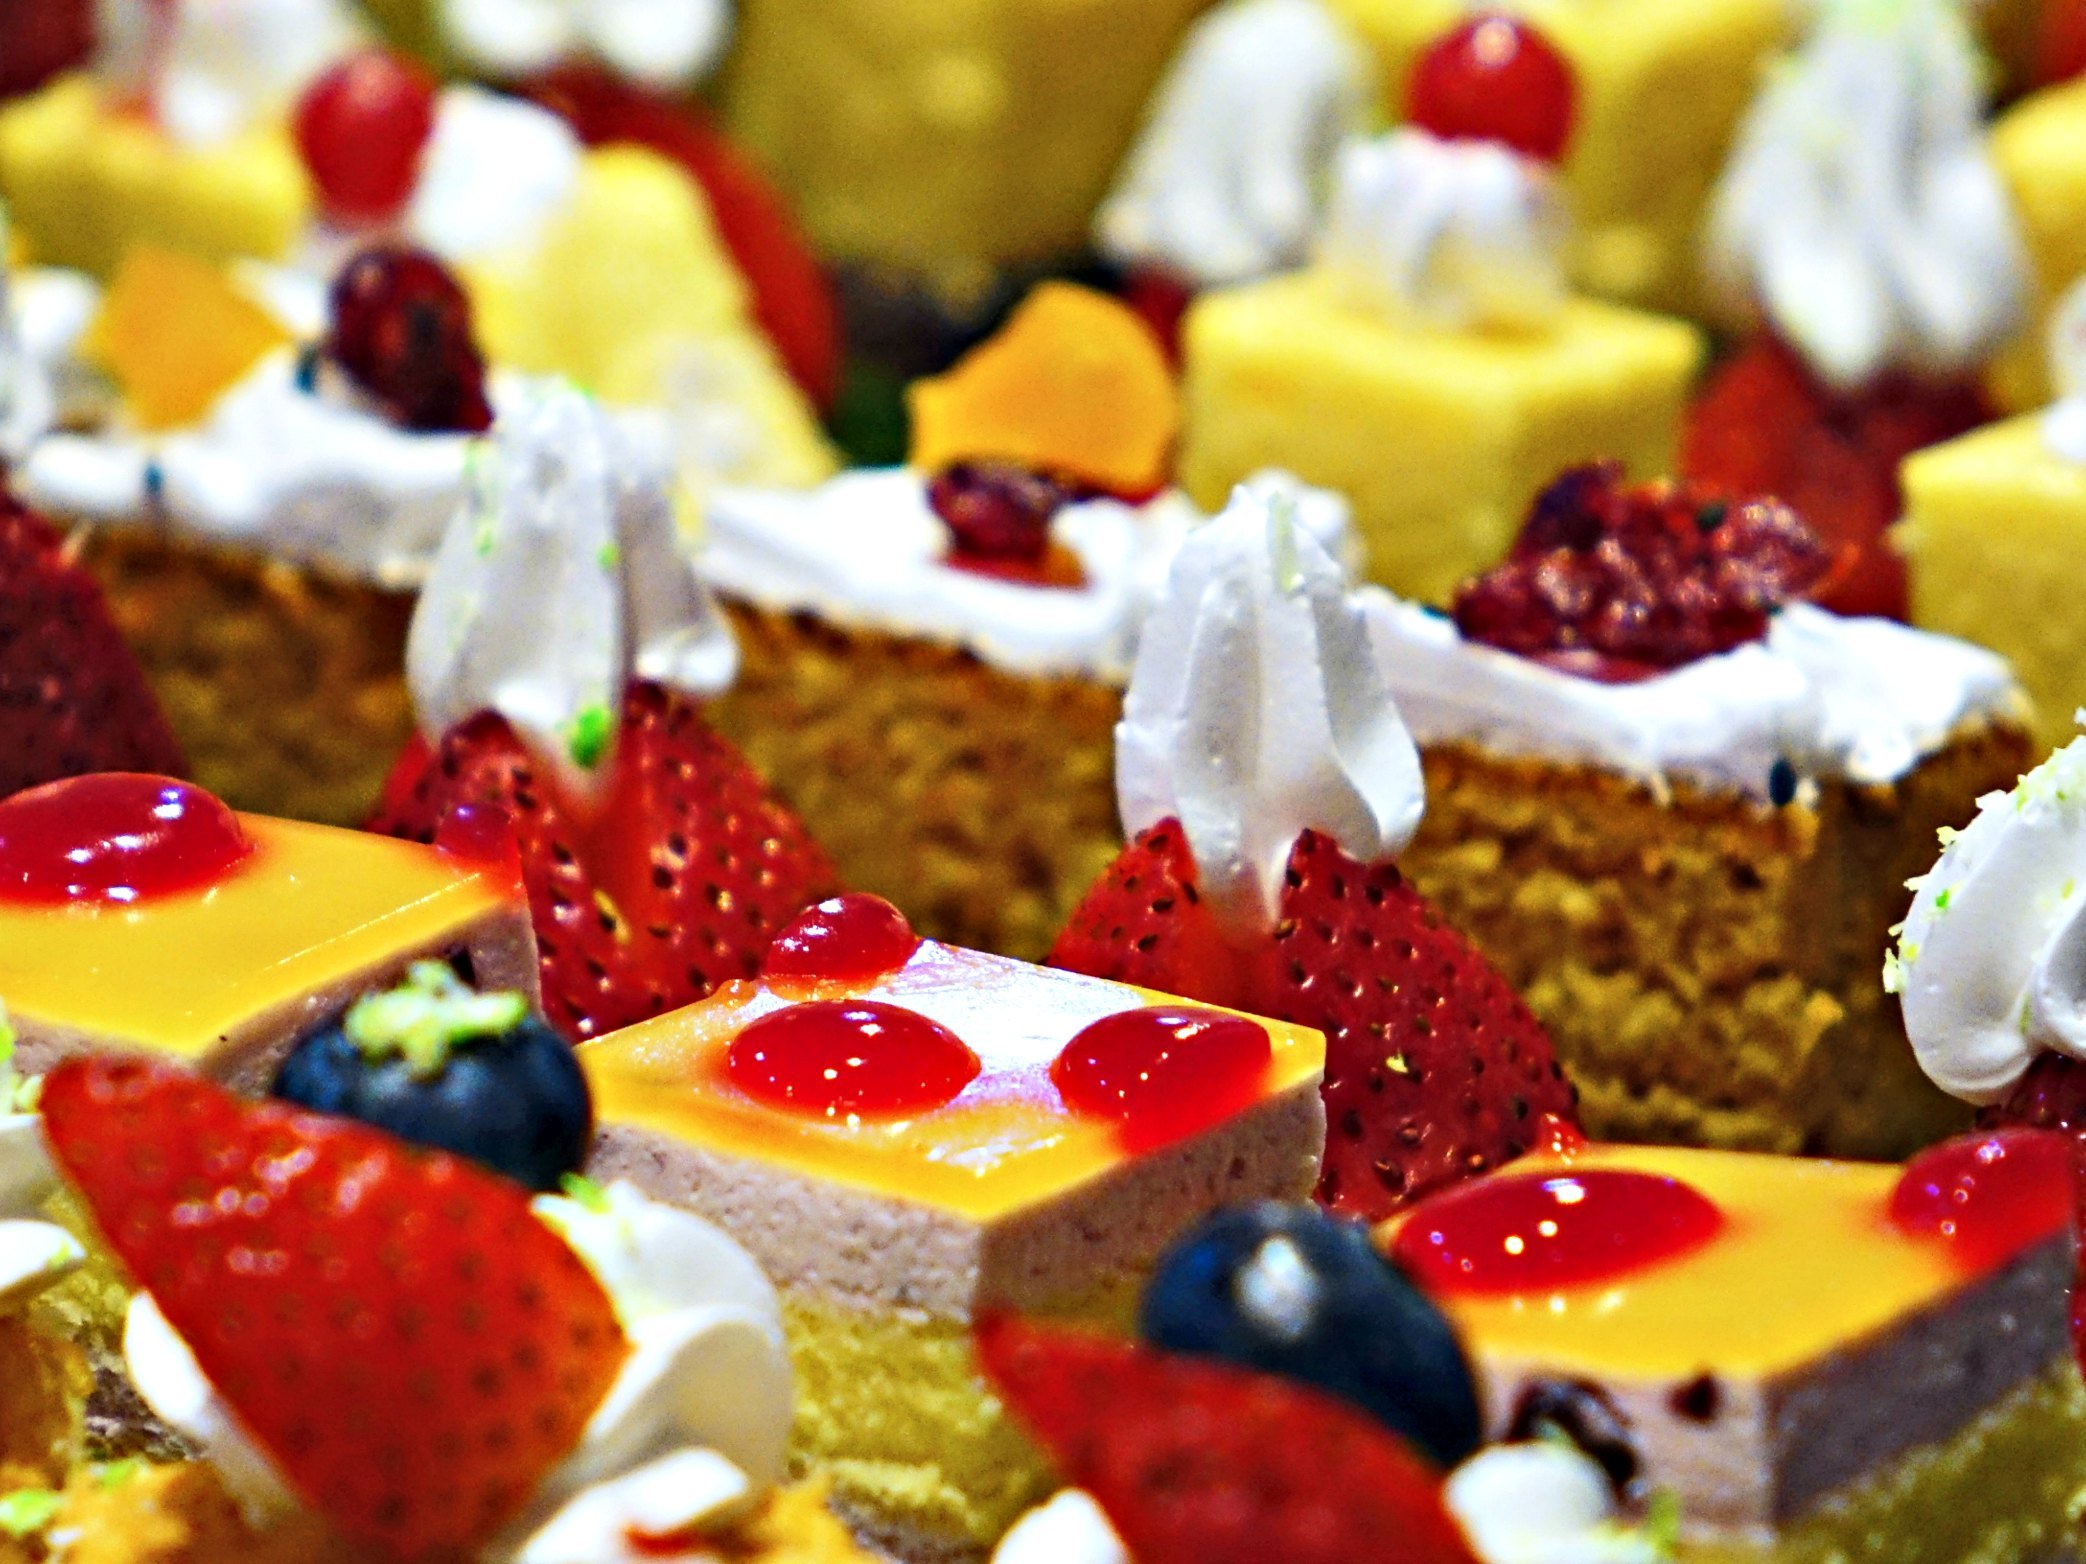 Mini Desserts for a fundraising gala at Hazeltine National Golf Club